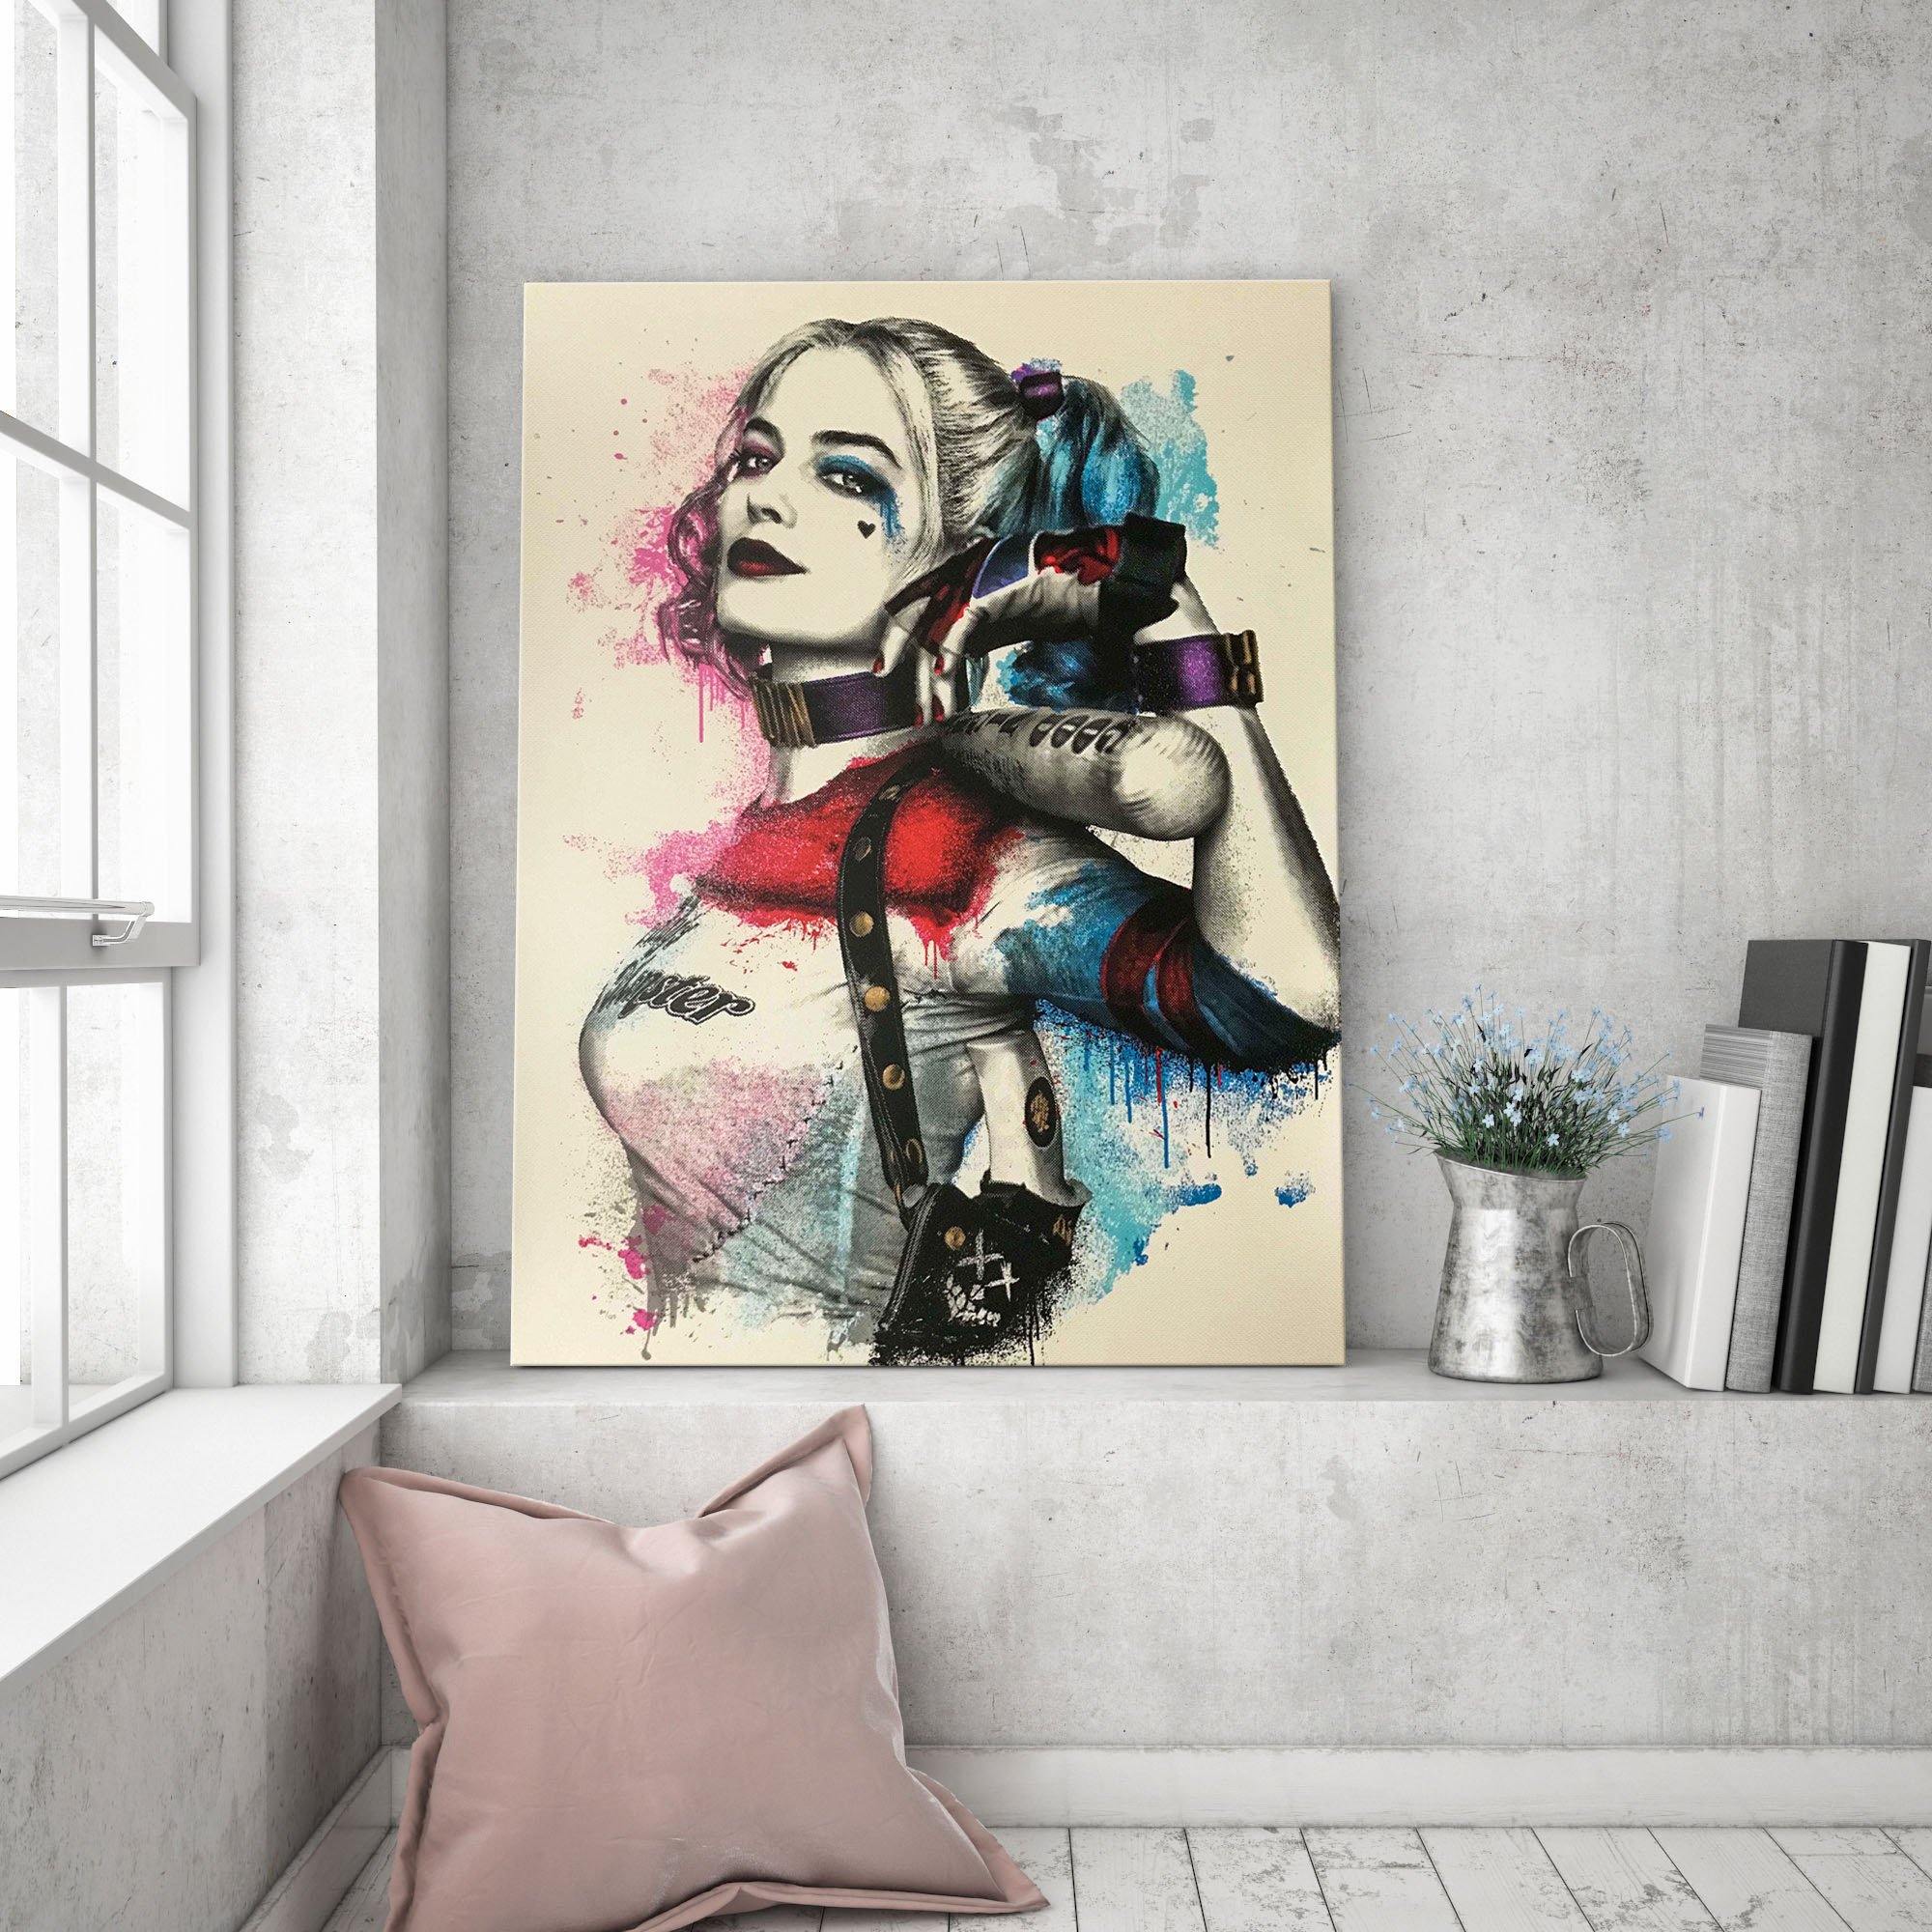 Harley Quinn (Margot Robbie) Canvas Wall Art Print - SharpWallArts